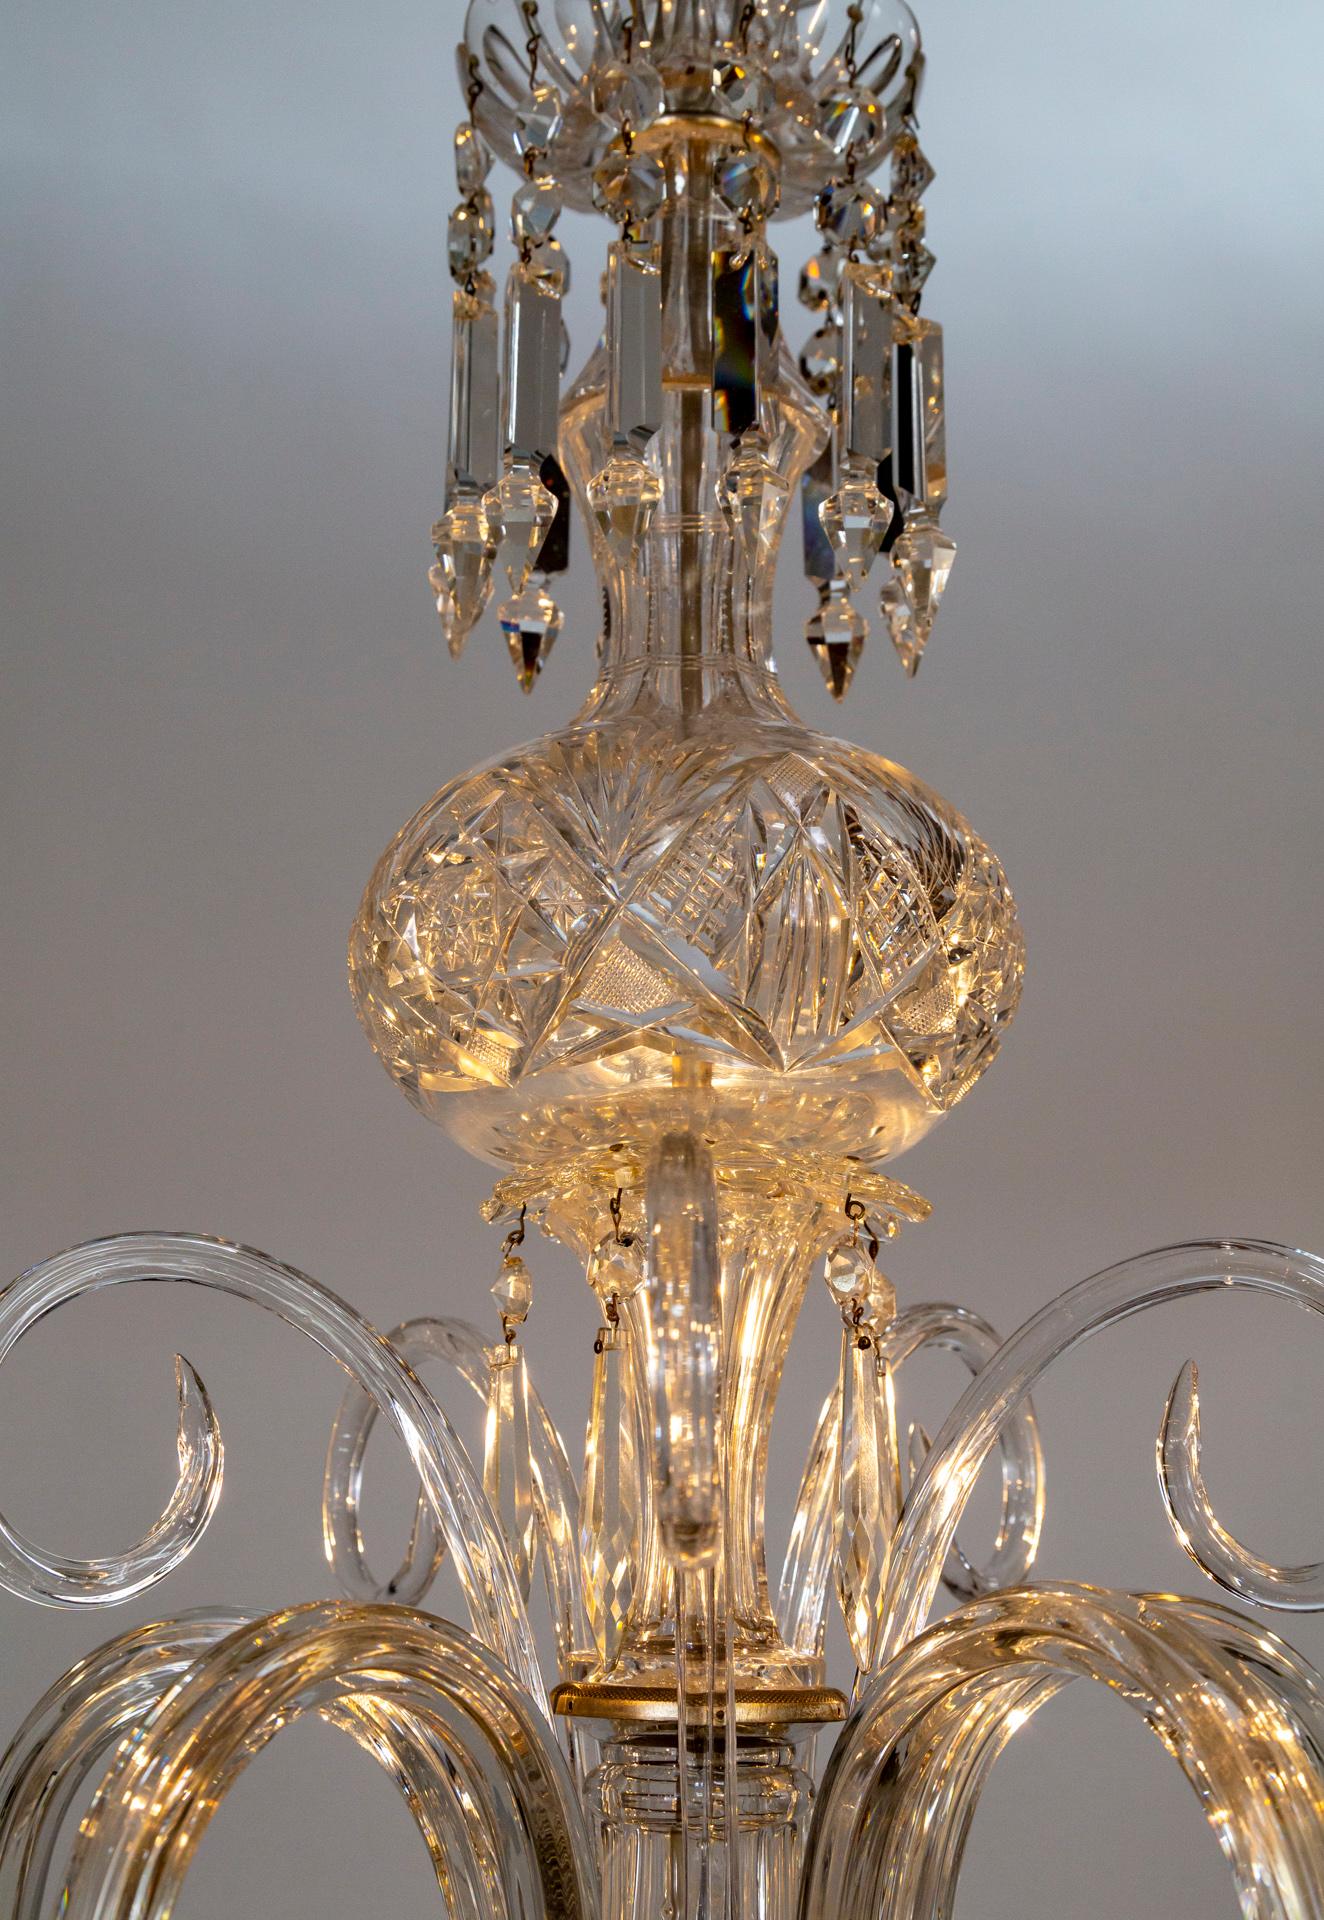 1920s style chandelier